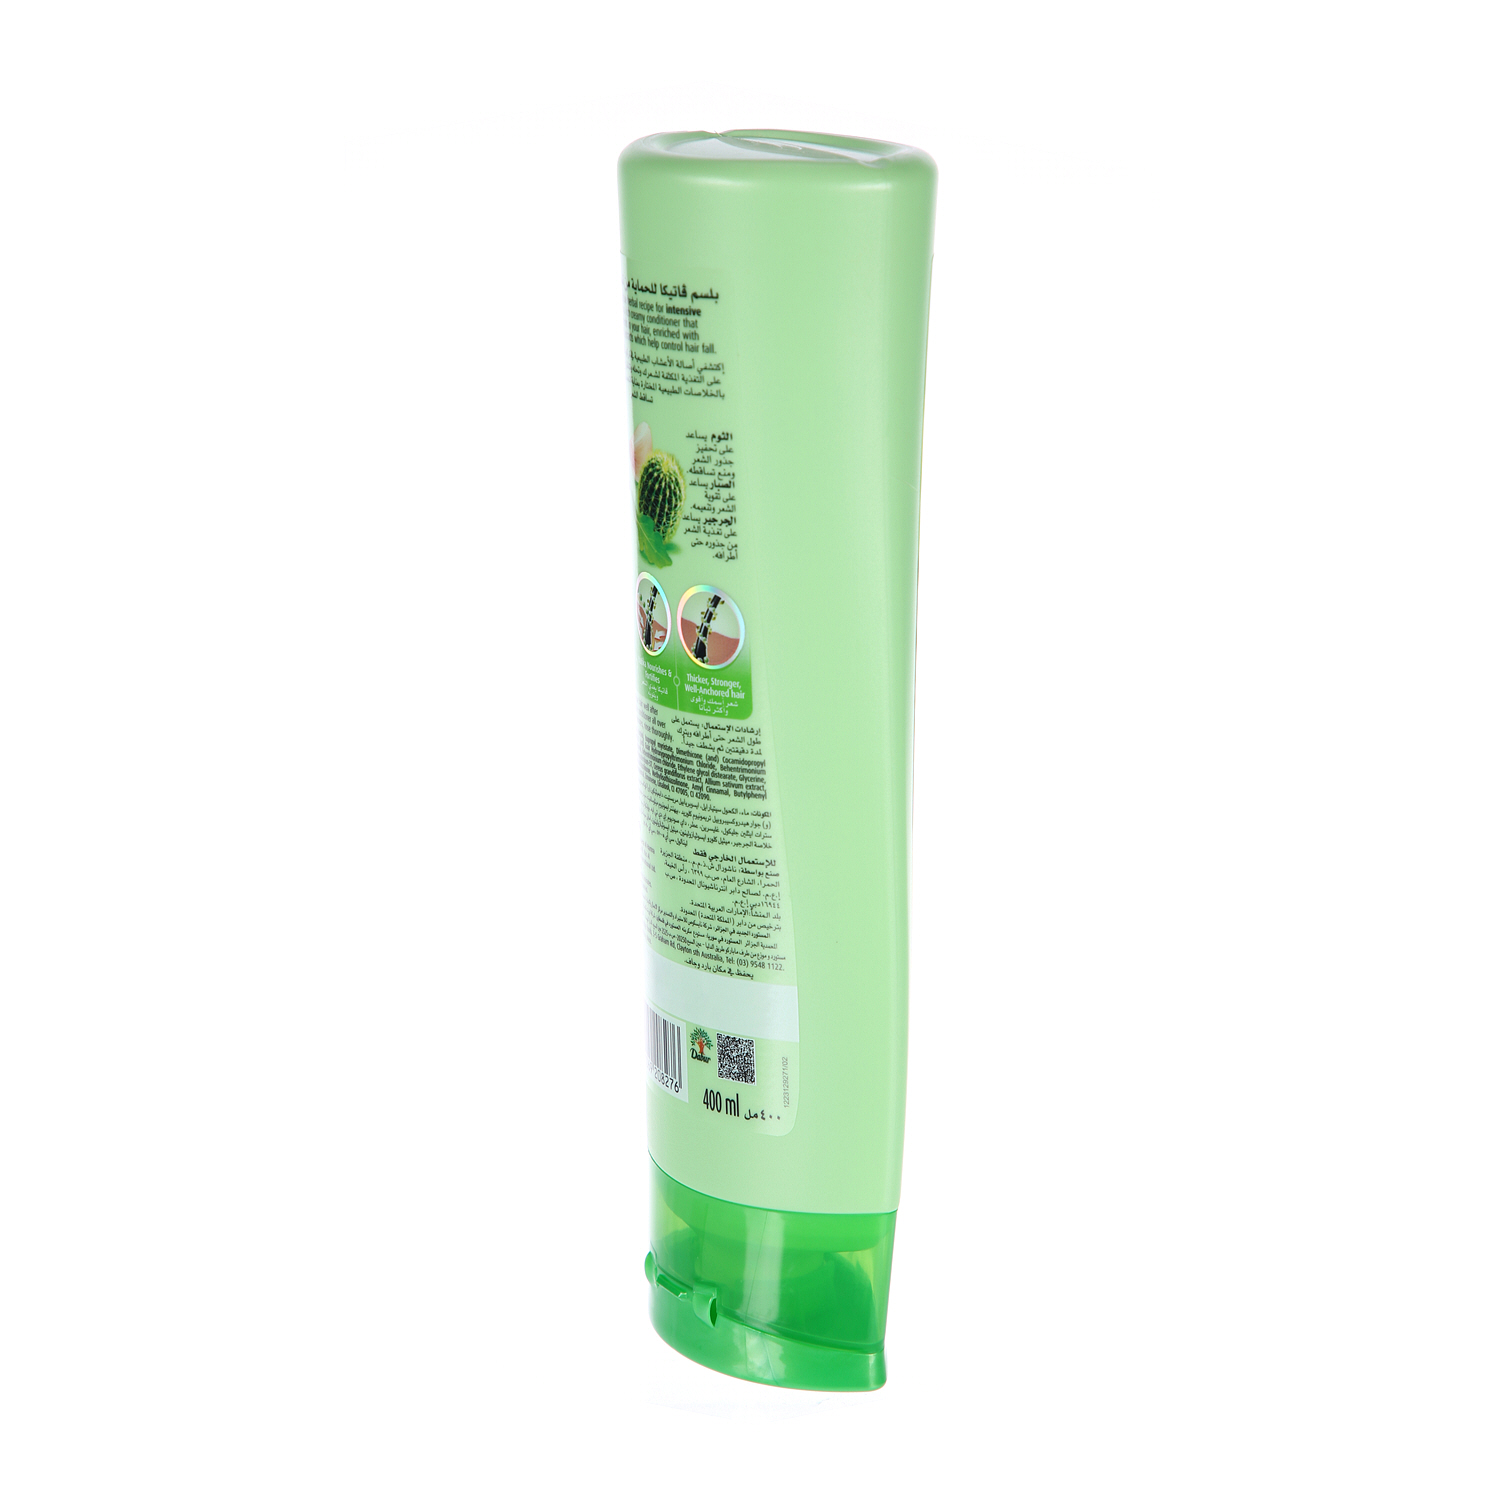 Dabur Vatika Hairfal Control Conditioner Cactus & Gergir 400 ml